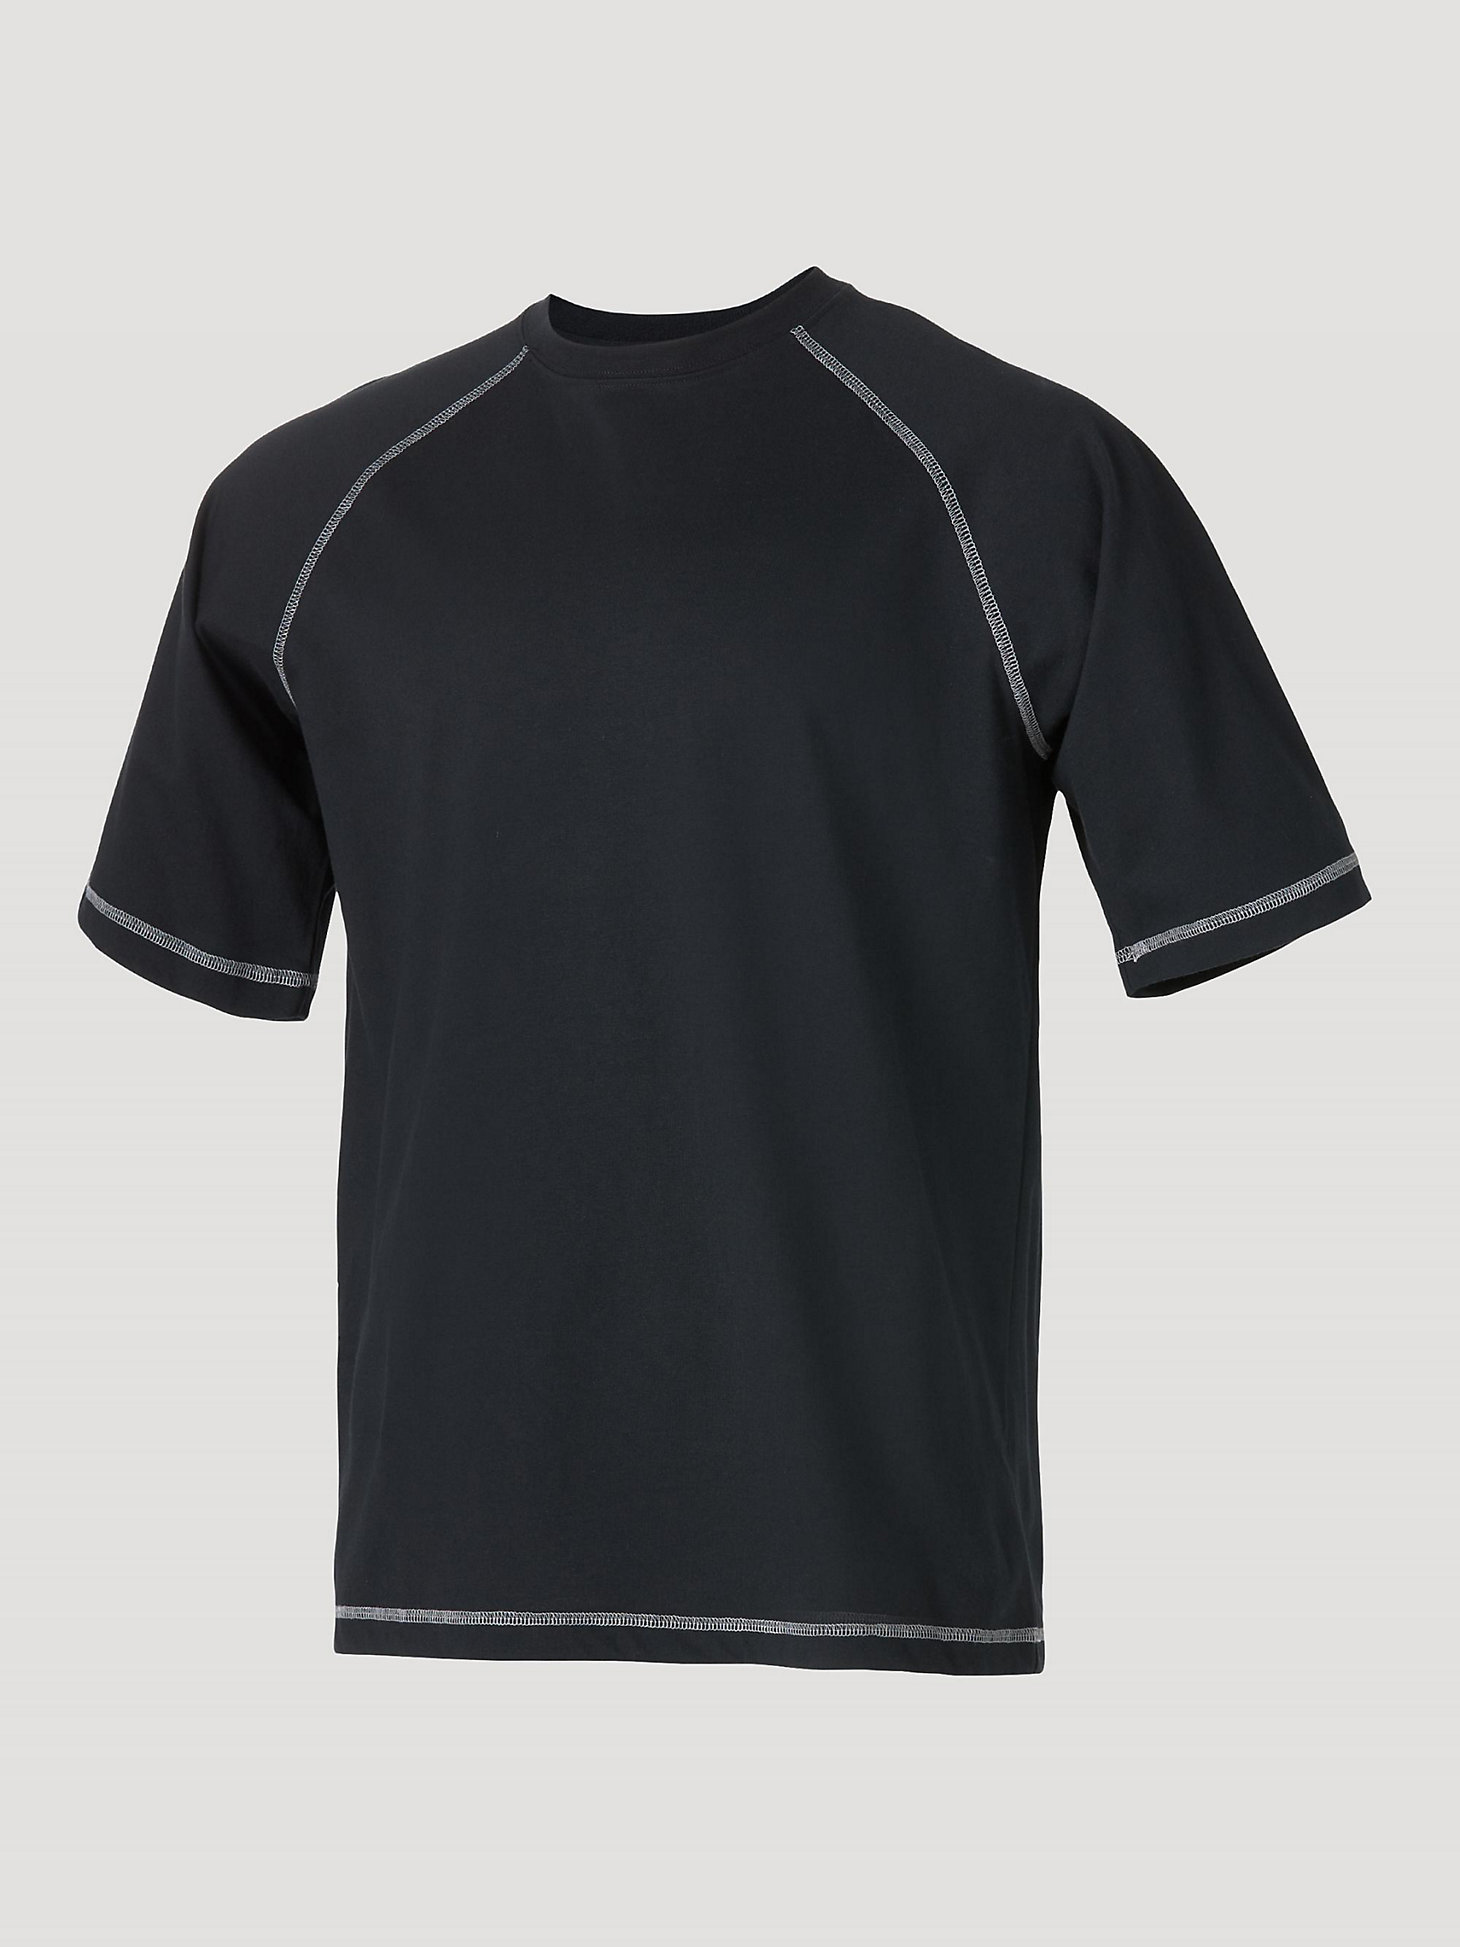 Wrangler® FR Flame Resistant Short Sleeve Base Layer T-Shirt in Black alternative view 4